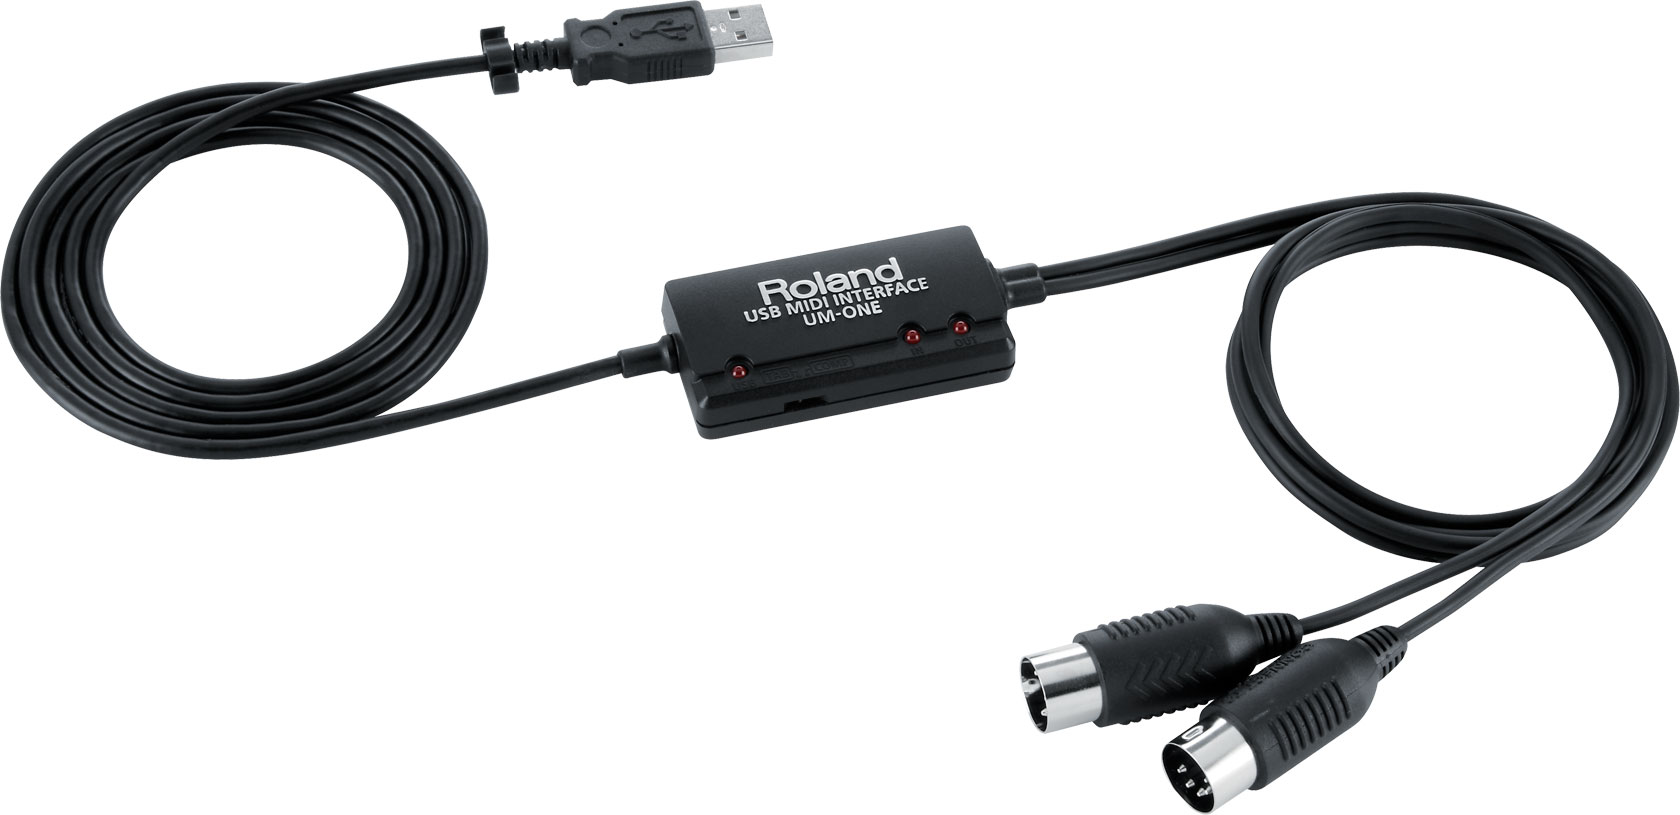 USB Sync Cable Cord Lead For Roland Edirol UM-550 UM-880 Audio Capture Interface 